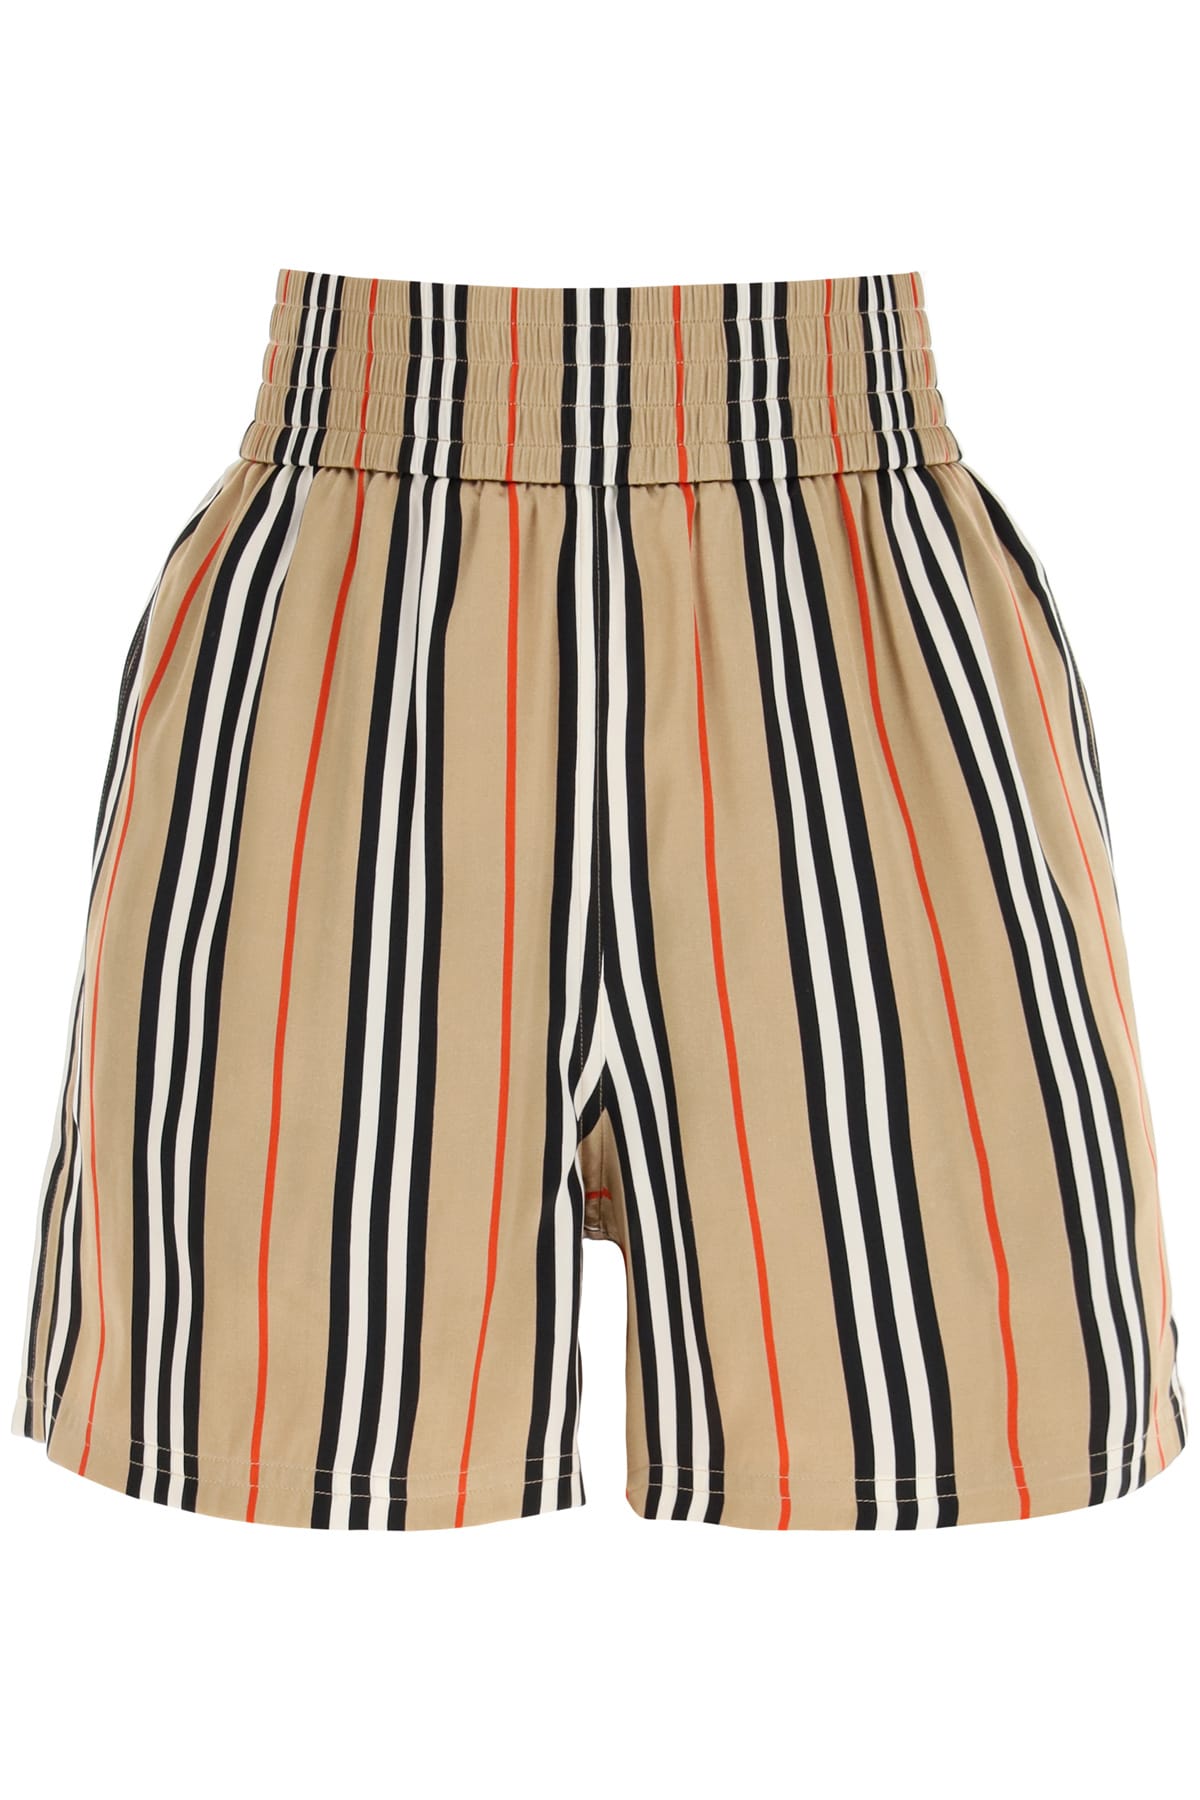 Burberry Marsett Striped Silk Shorts